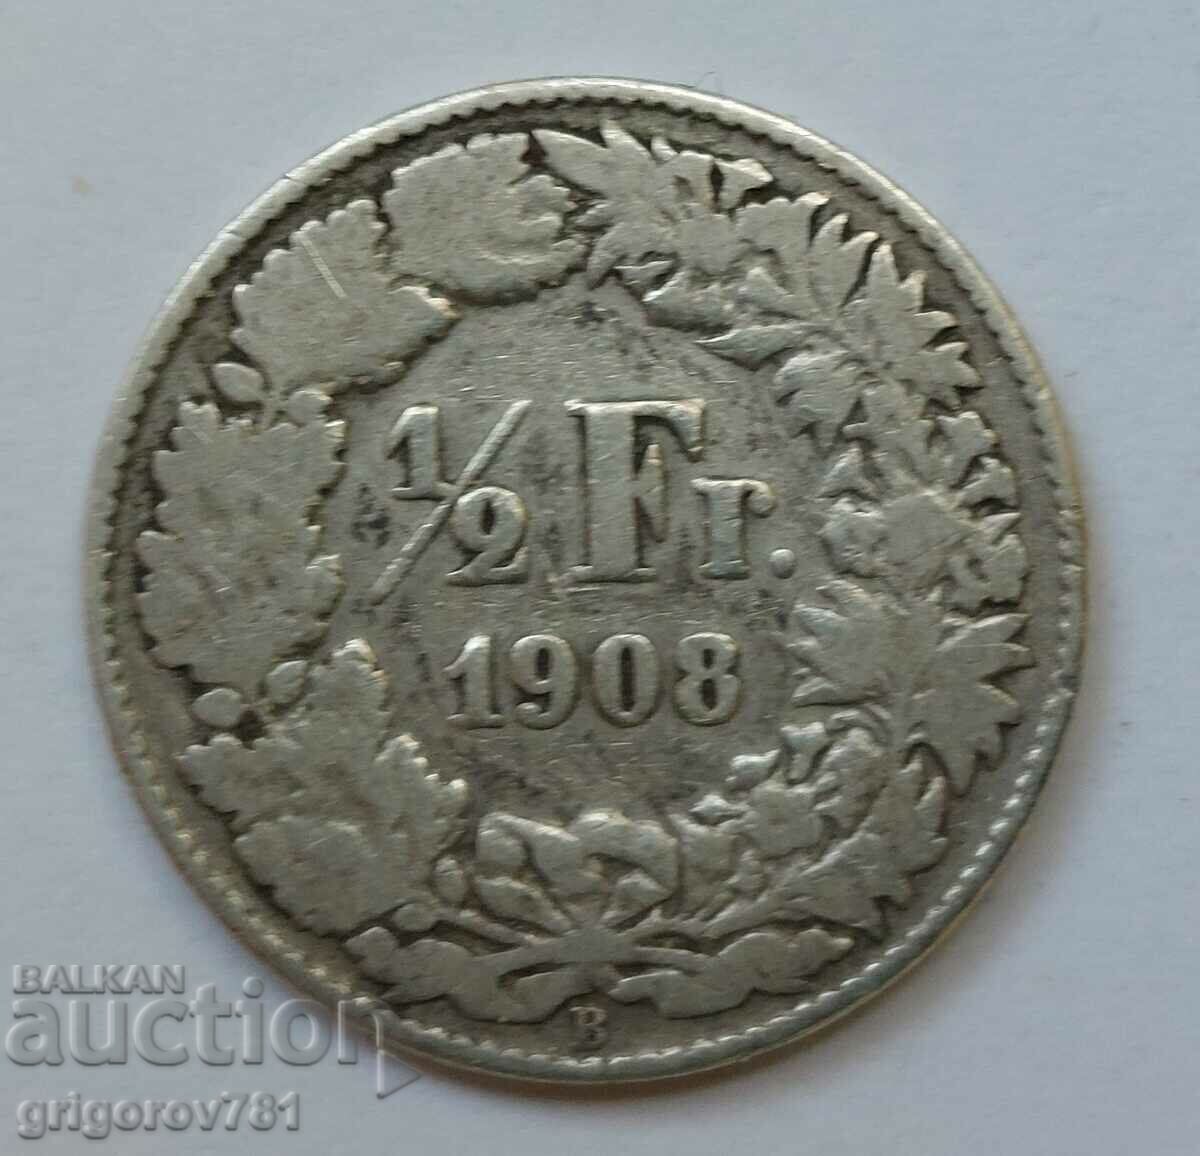 1/2 franc argint Elveția 1908 B - monedă de argint